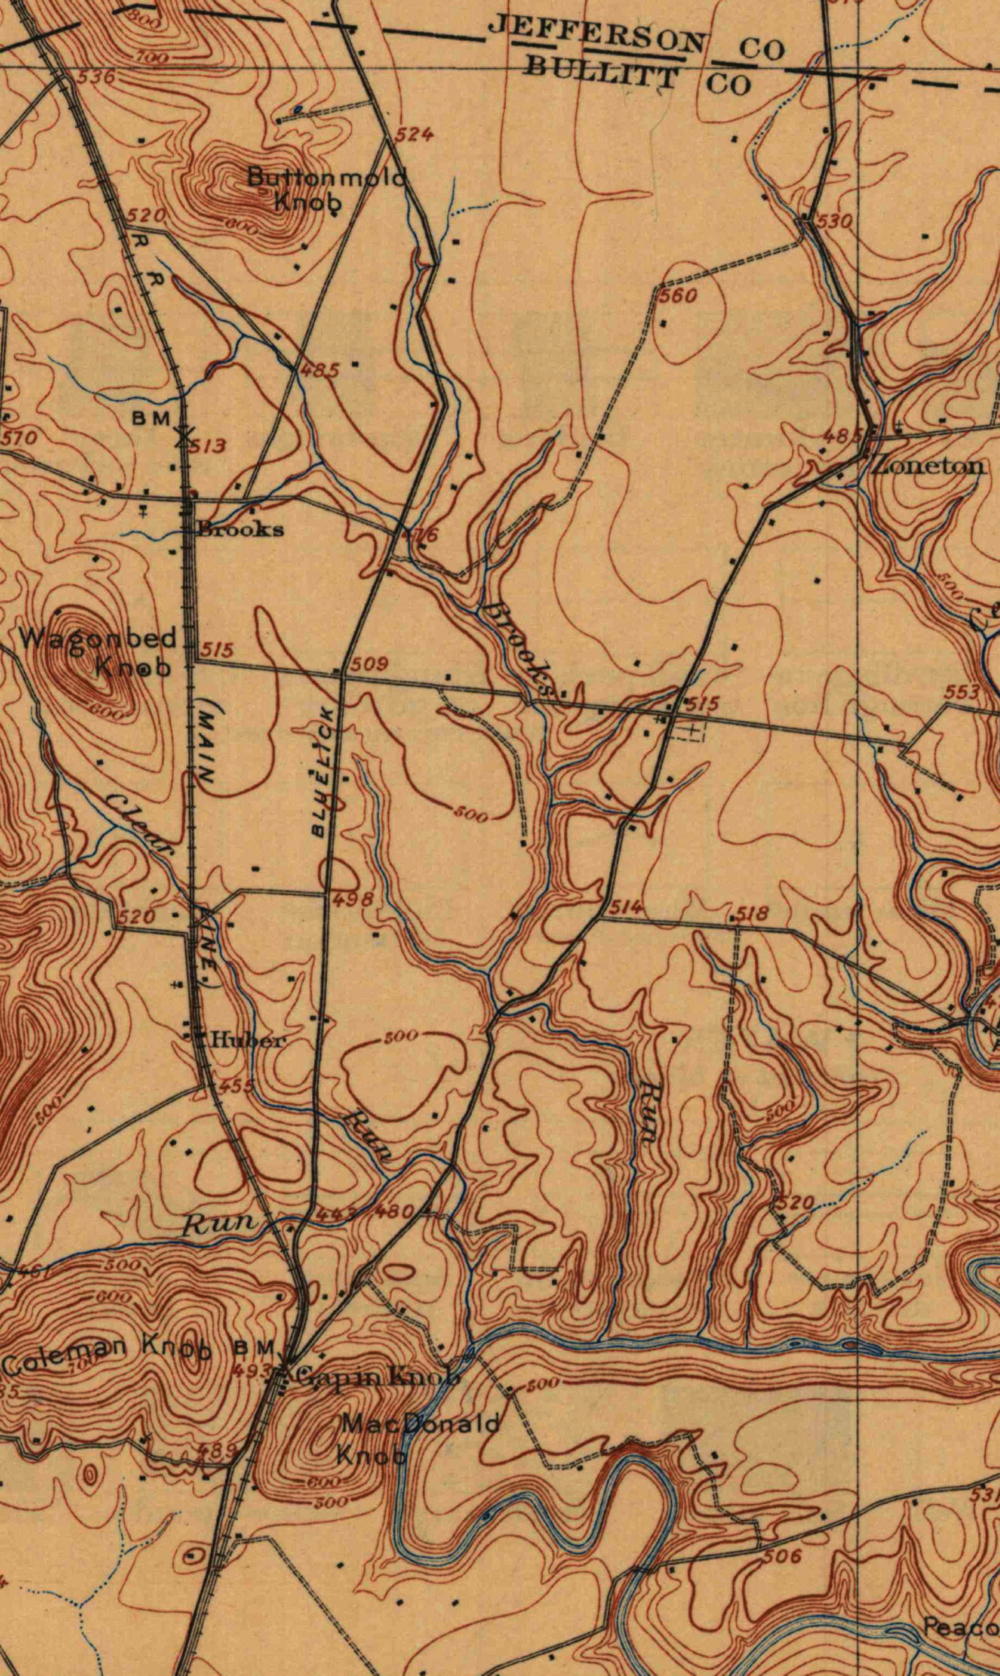 1907 topo map of northern Bullitt County